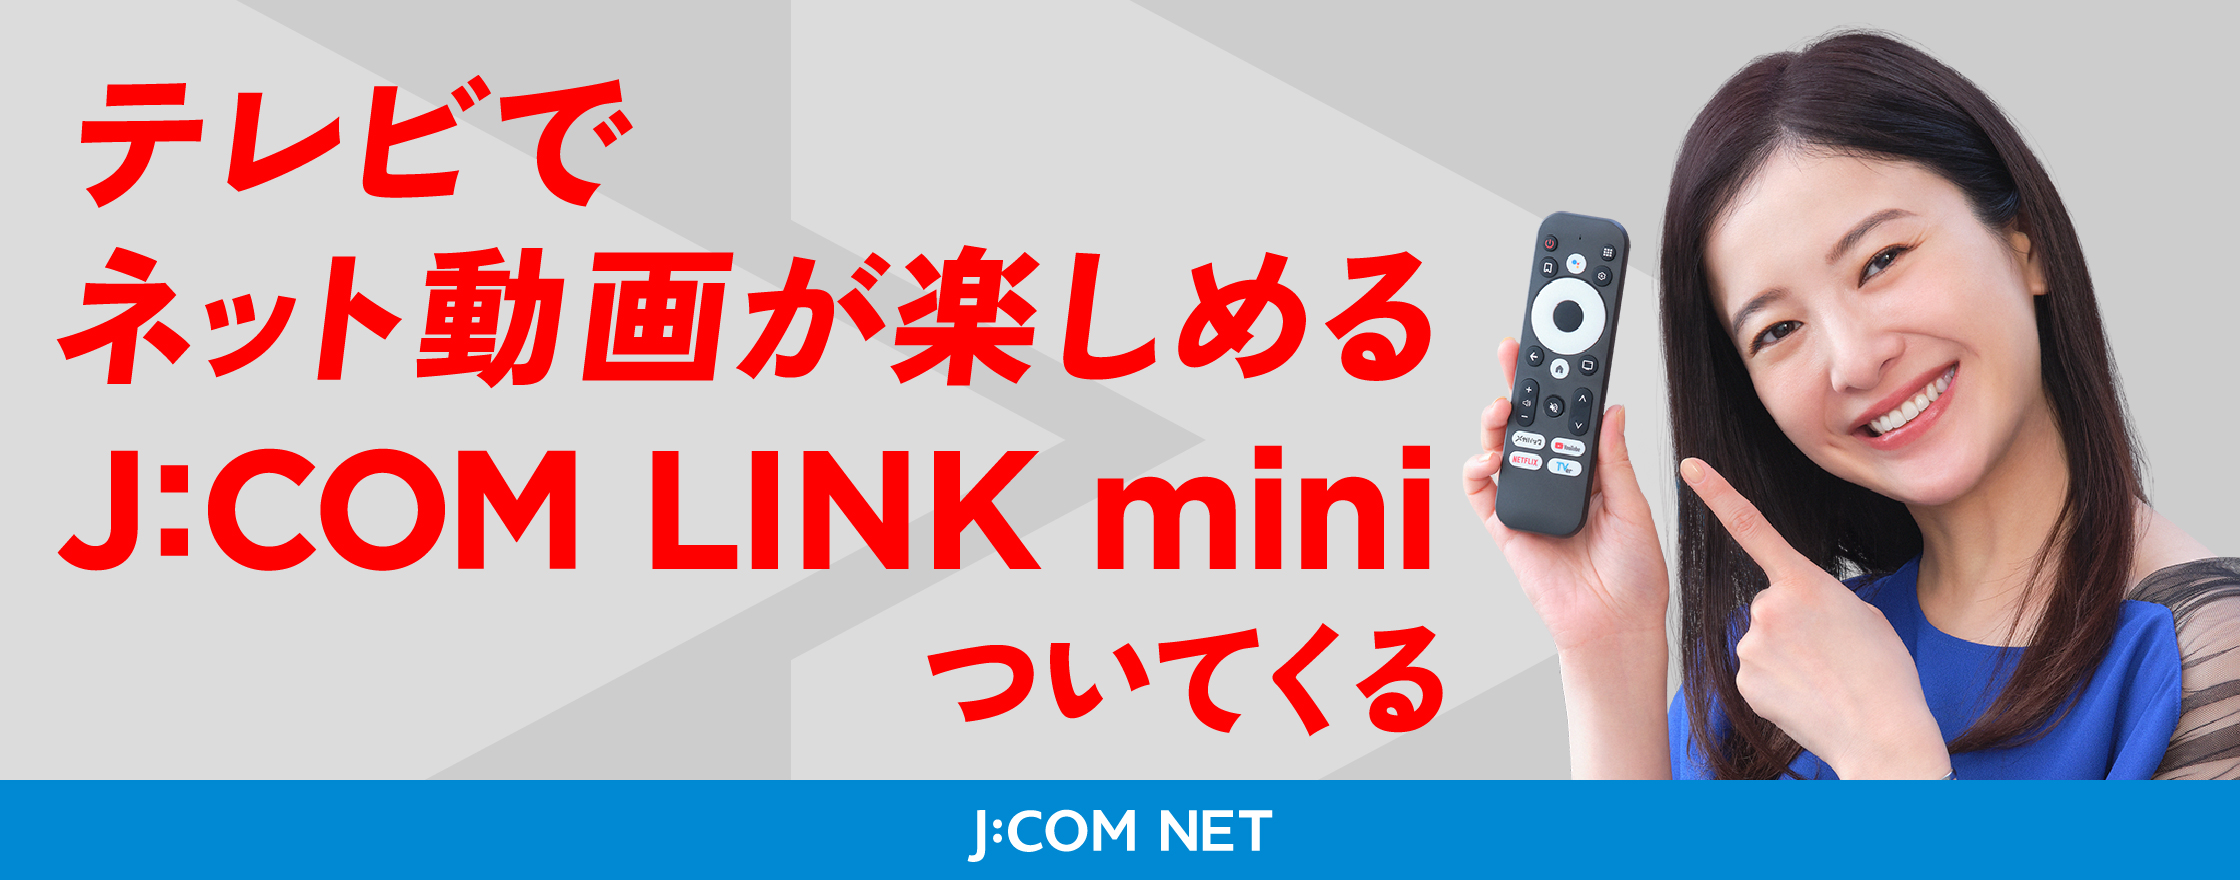 J:COMネットならテレビでネット動画が楽しめる J:COM LINK miniついてくる